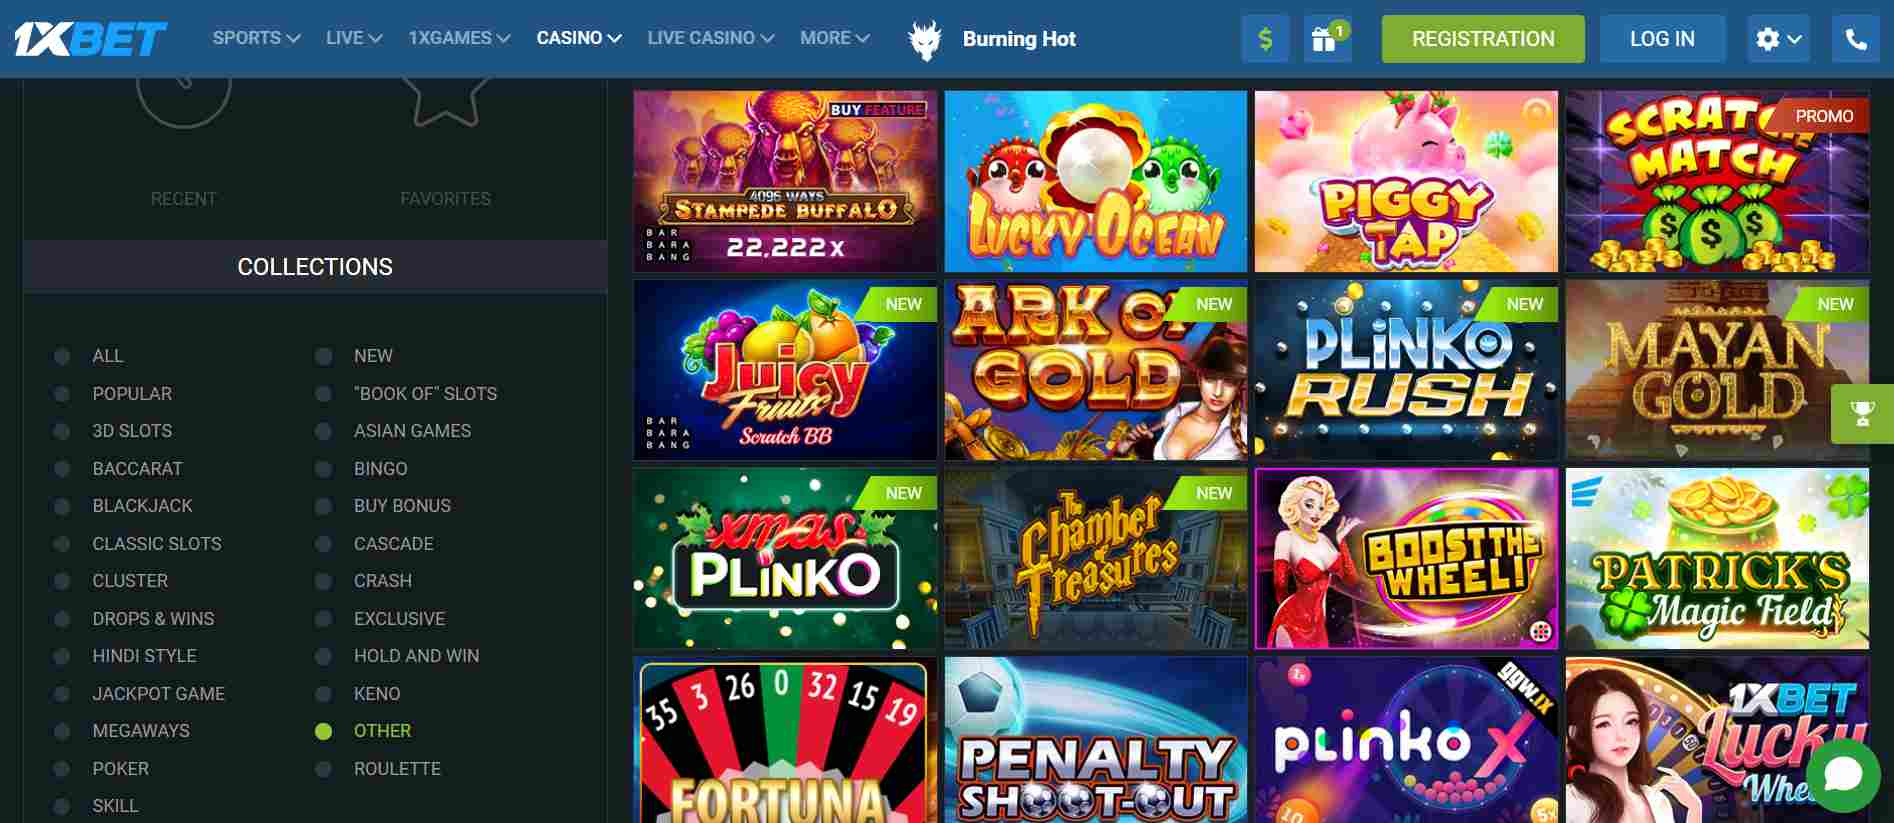 Casino games 1xbet Sweden